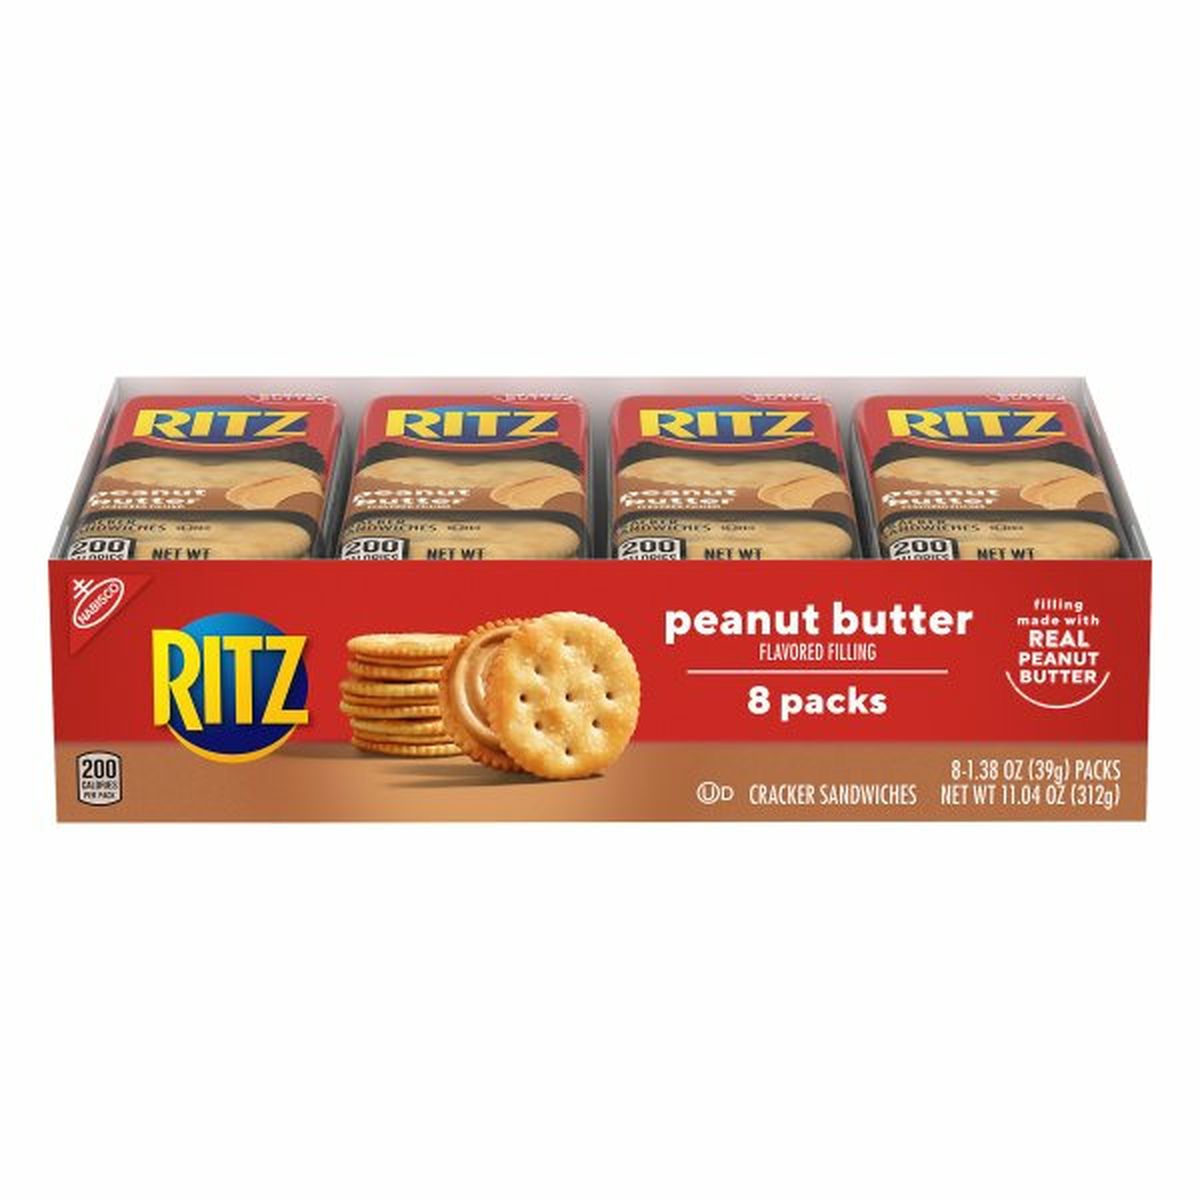 Calories in Ritz Cracker Sandwiches, Peanut Butter, 8 Pack